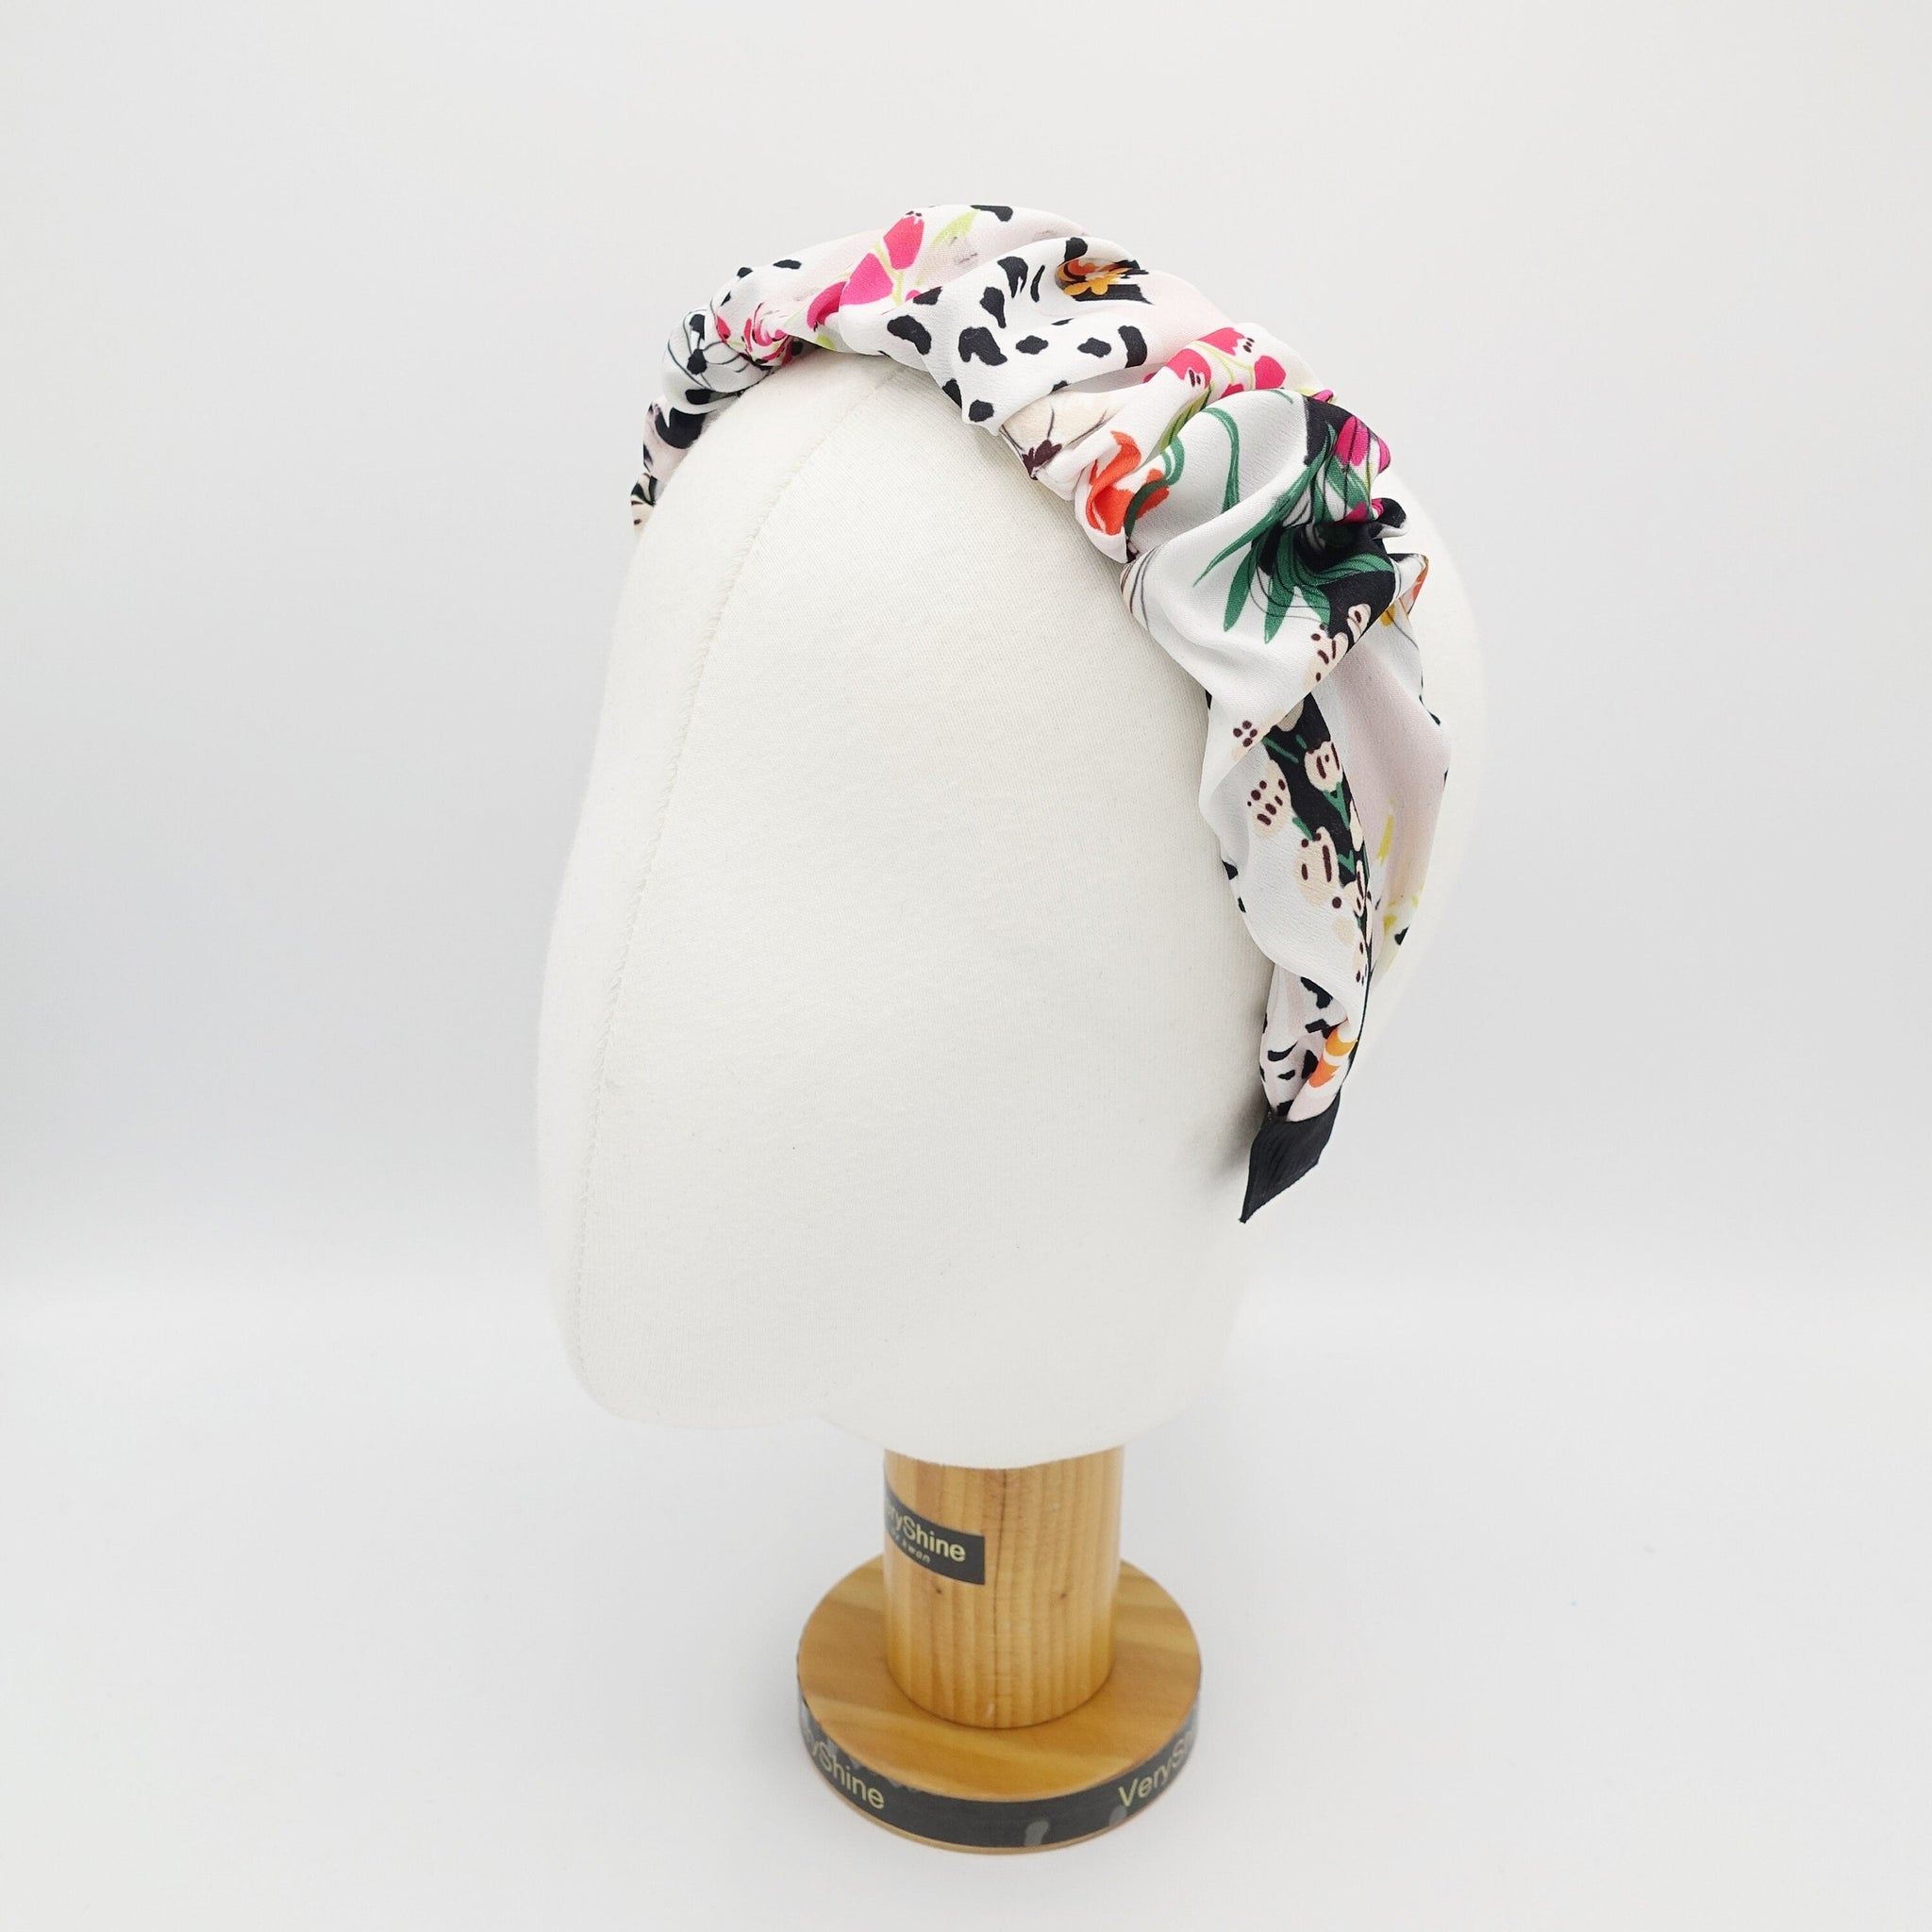 VeryShine Headband multi floral print headband flower print hairband pleated hair accessory for women